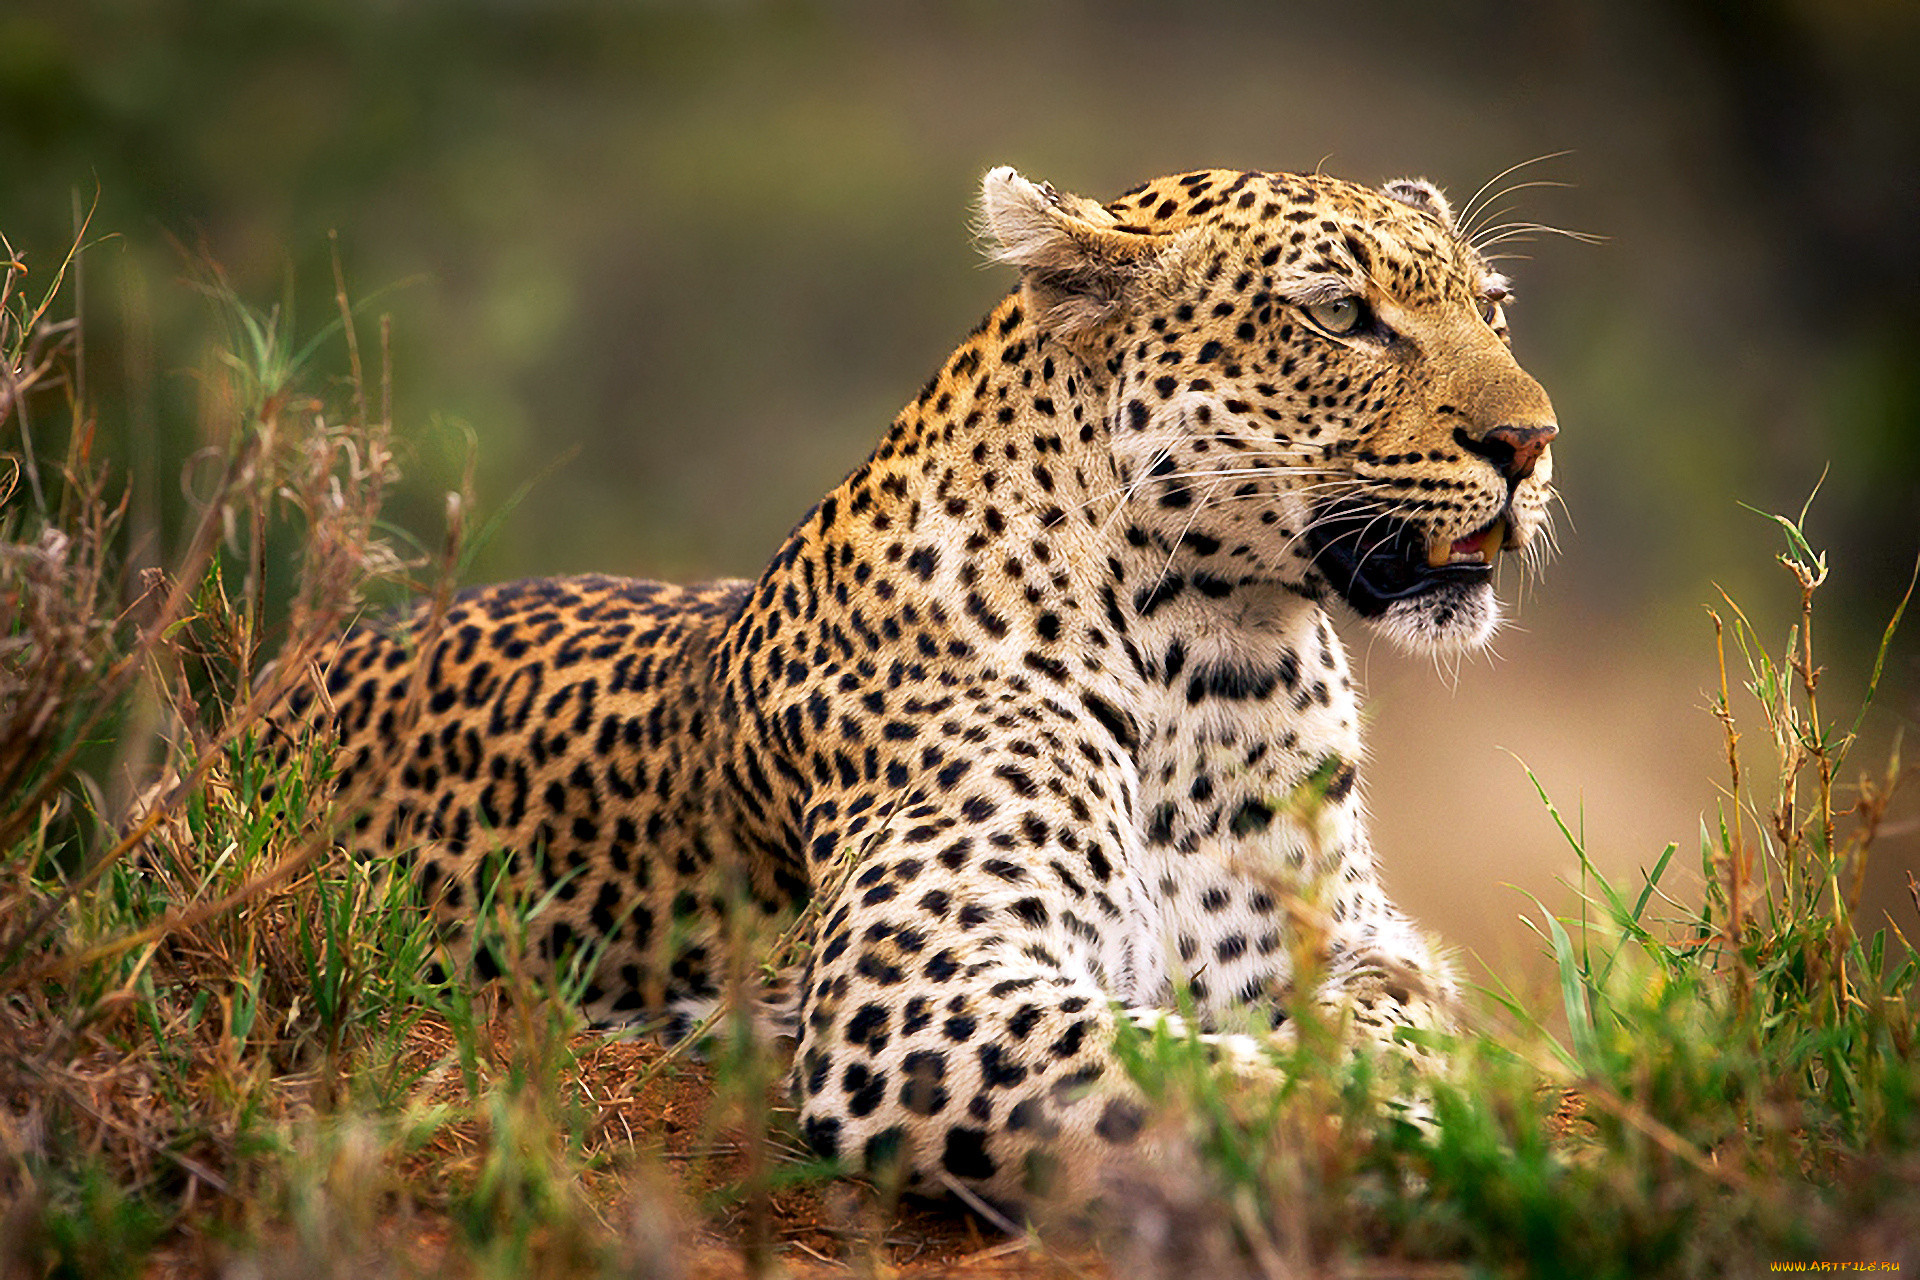 Animals org. Берберийский леопард. Леопард анфас. Серпопард. Леопард в природе.